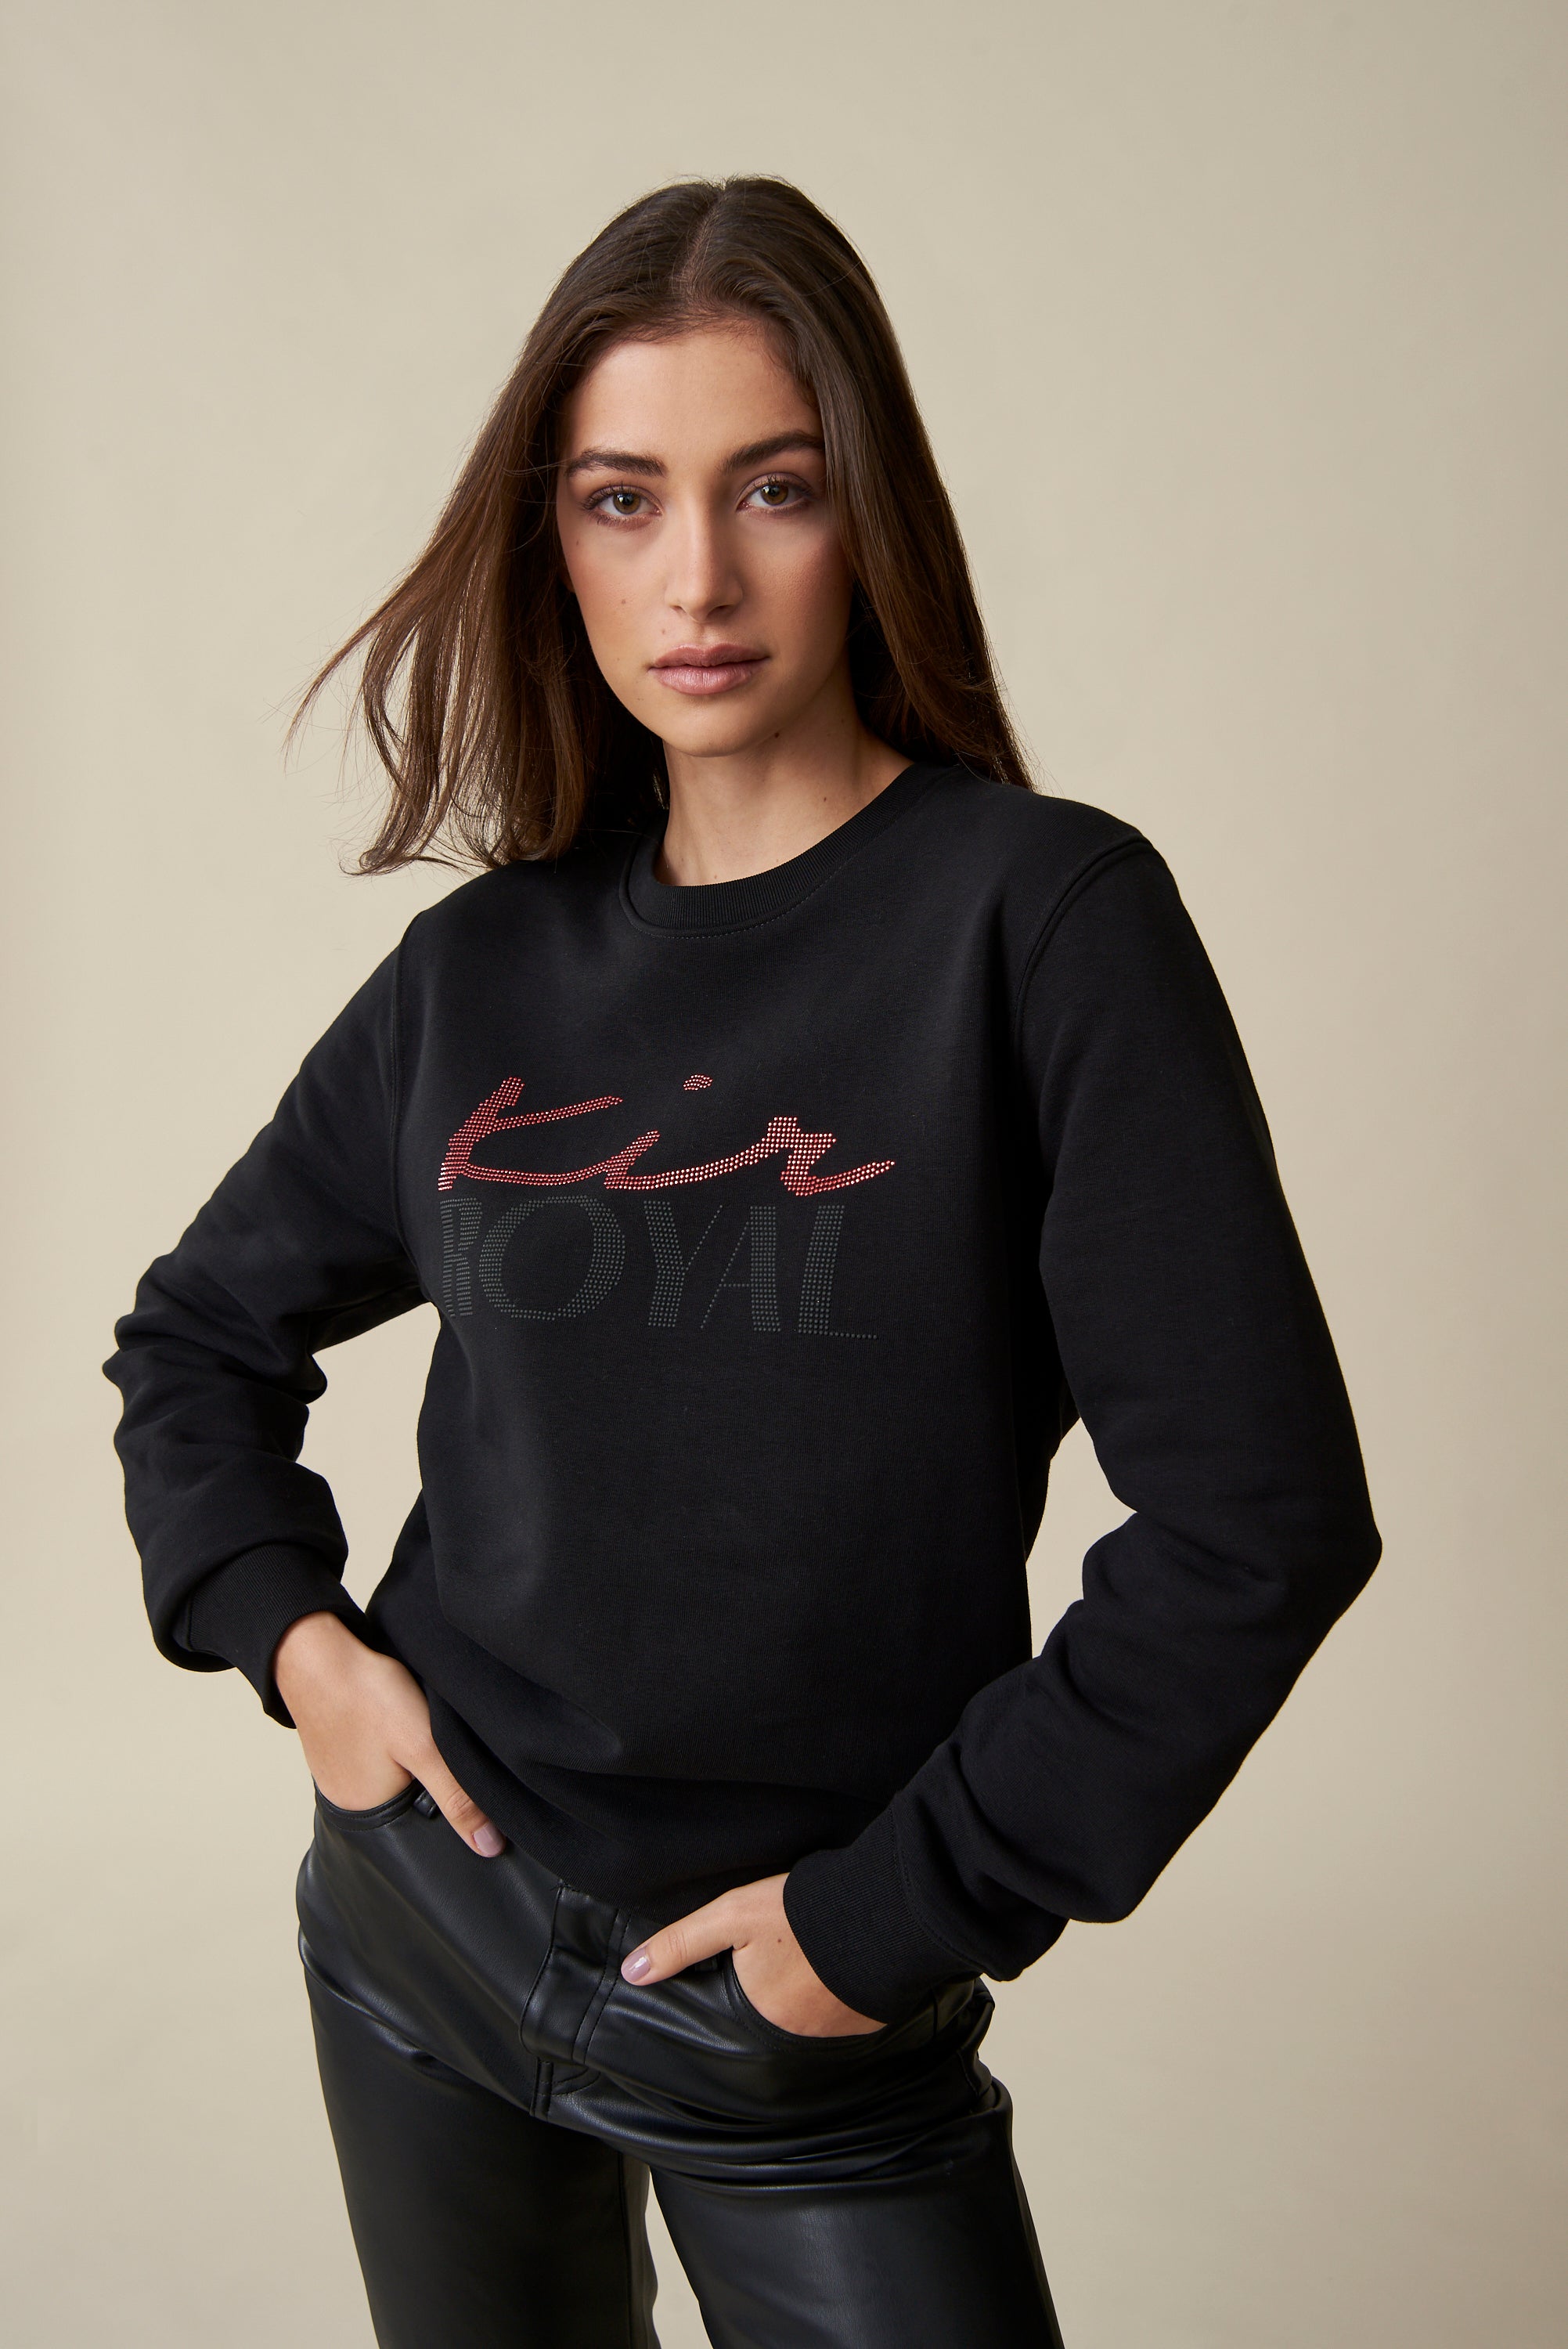 Kir Royal Sweatshirt - Schwarz/Strass